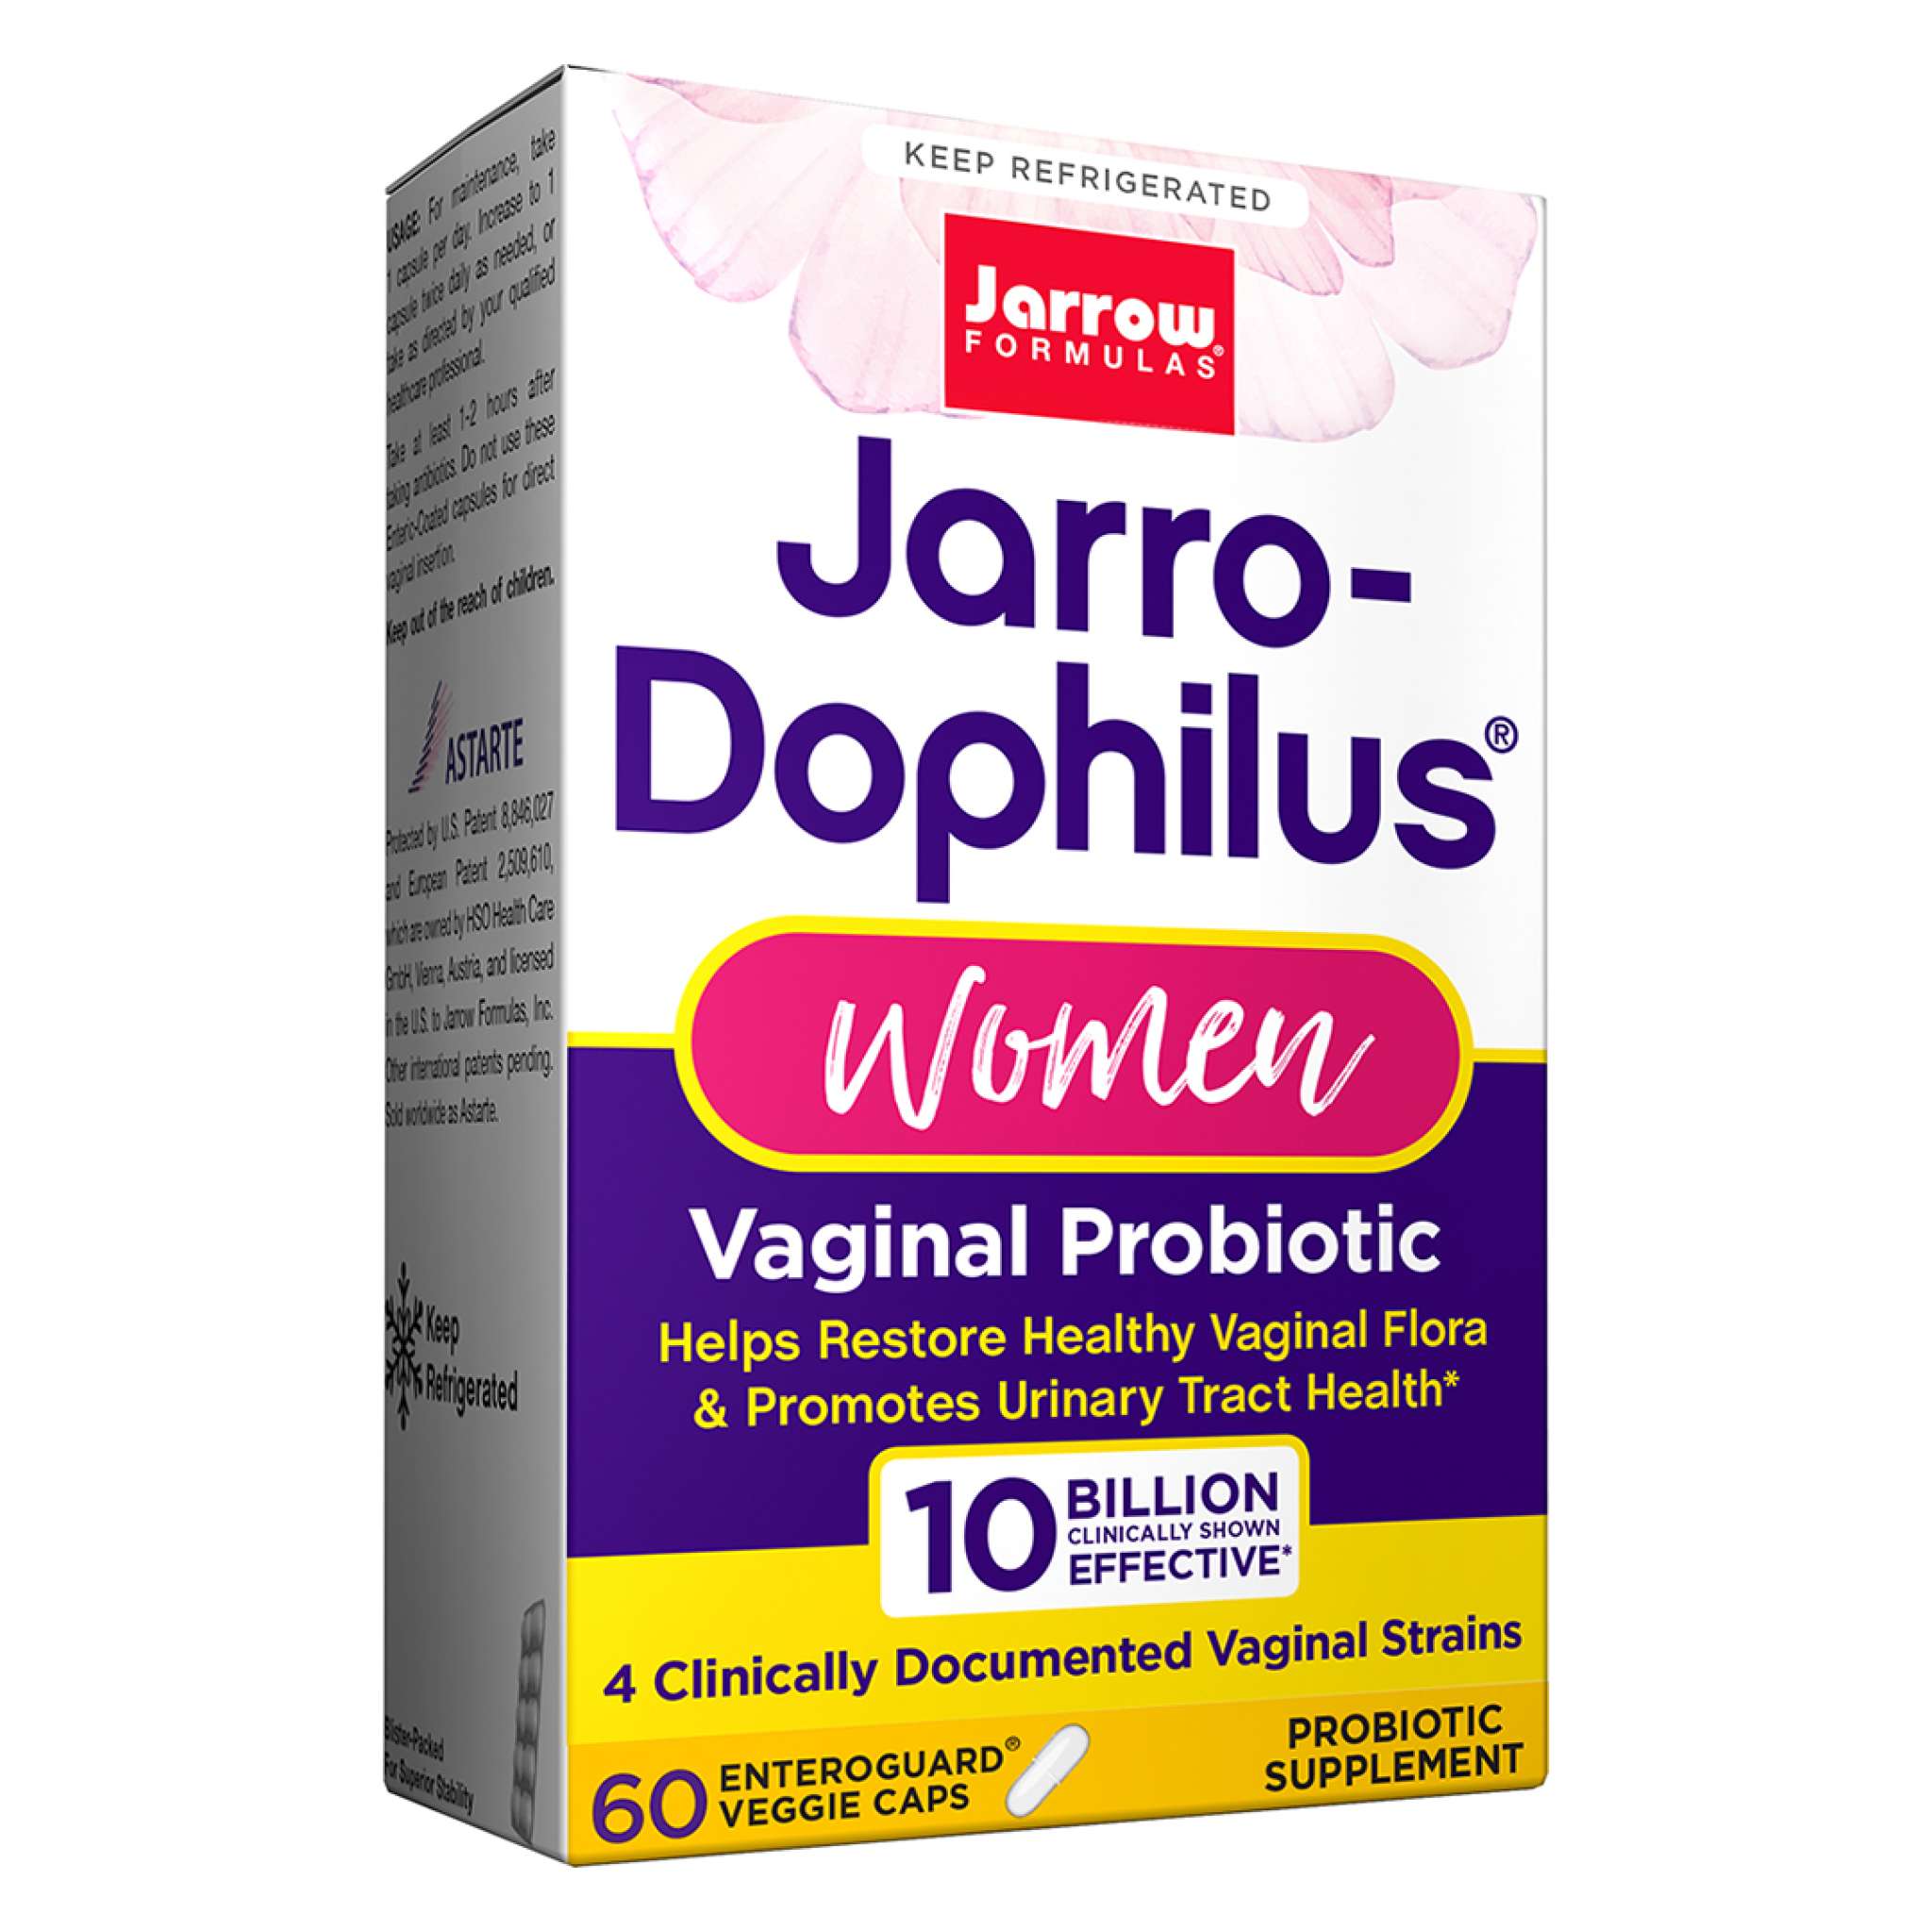 Jarrow Formulas - Jarro Doph Women 10 Bill